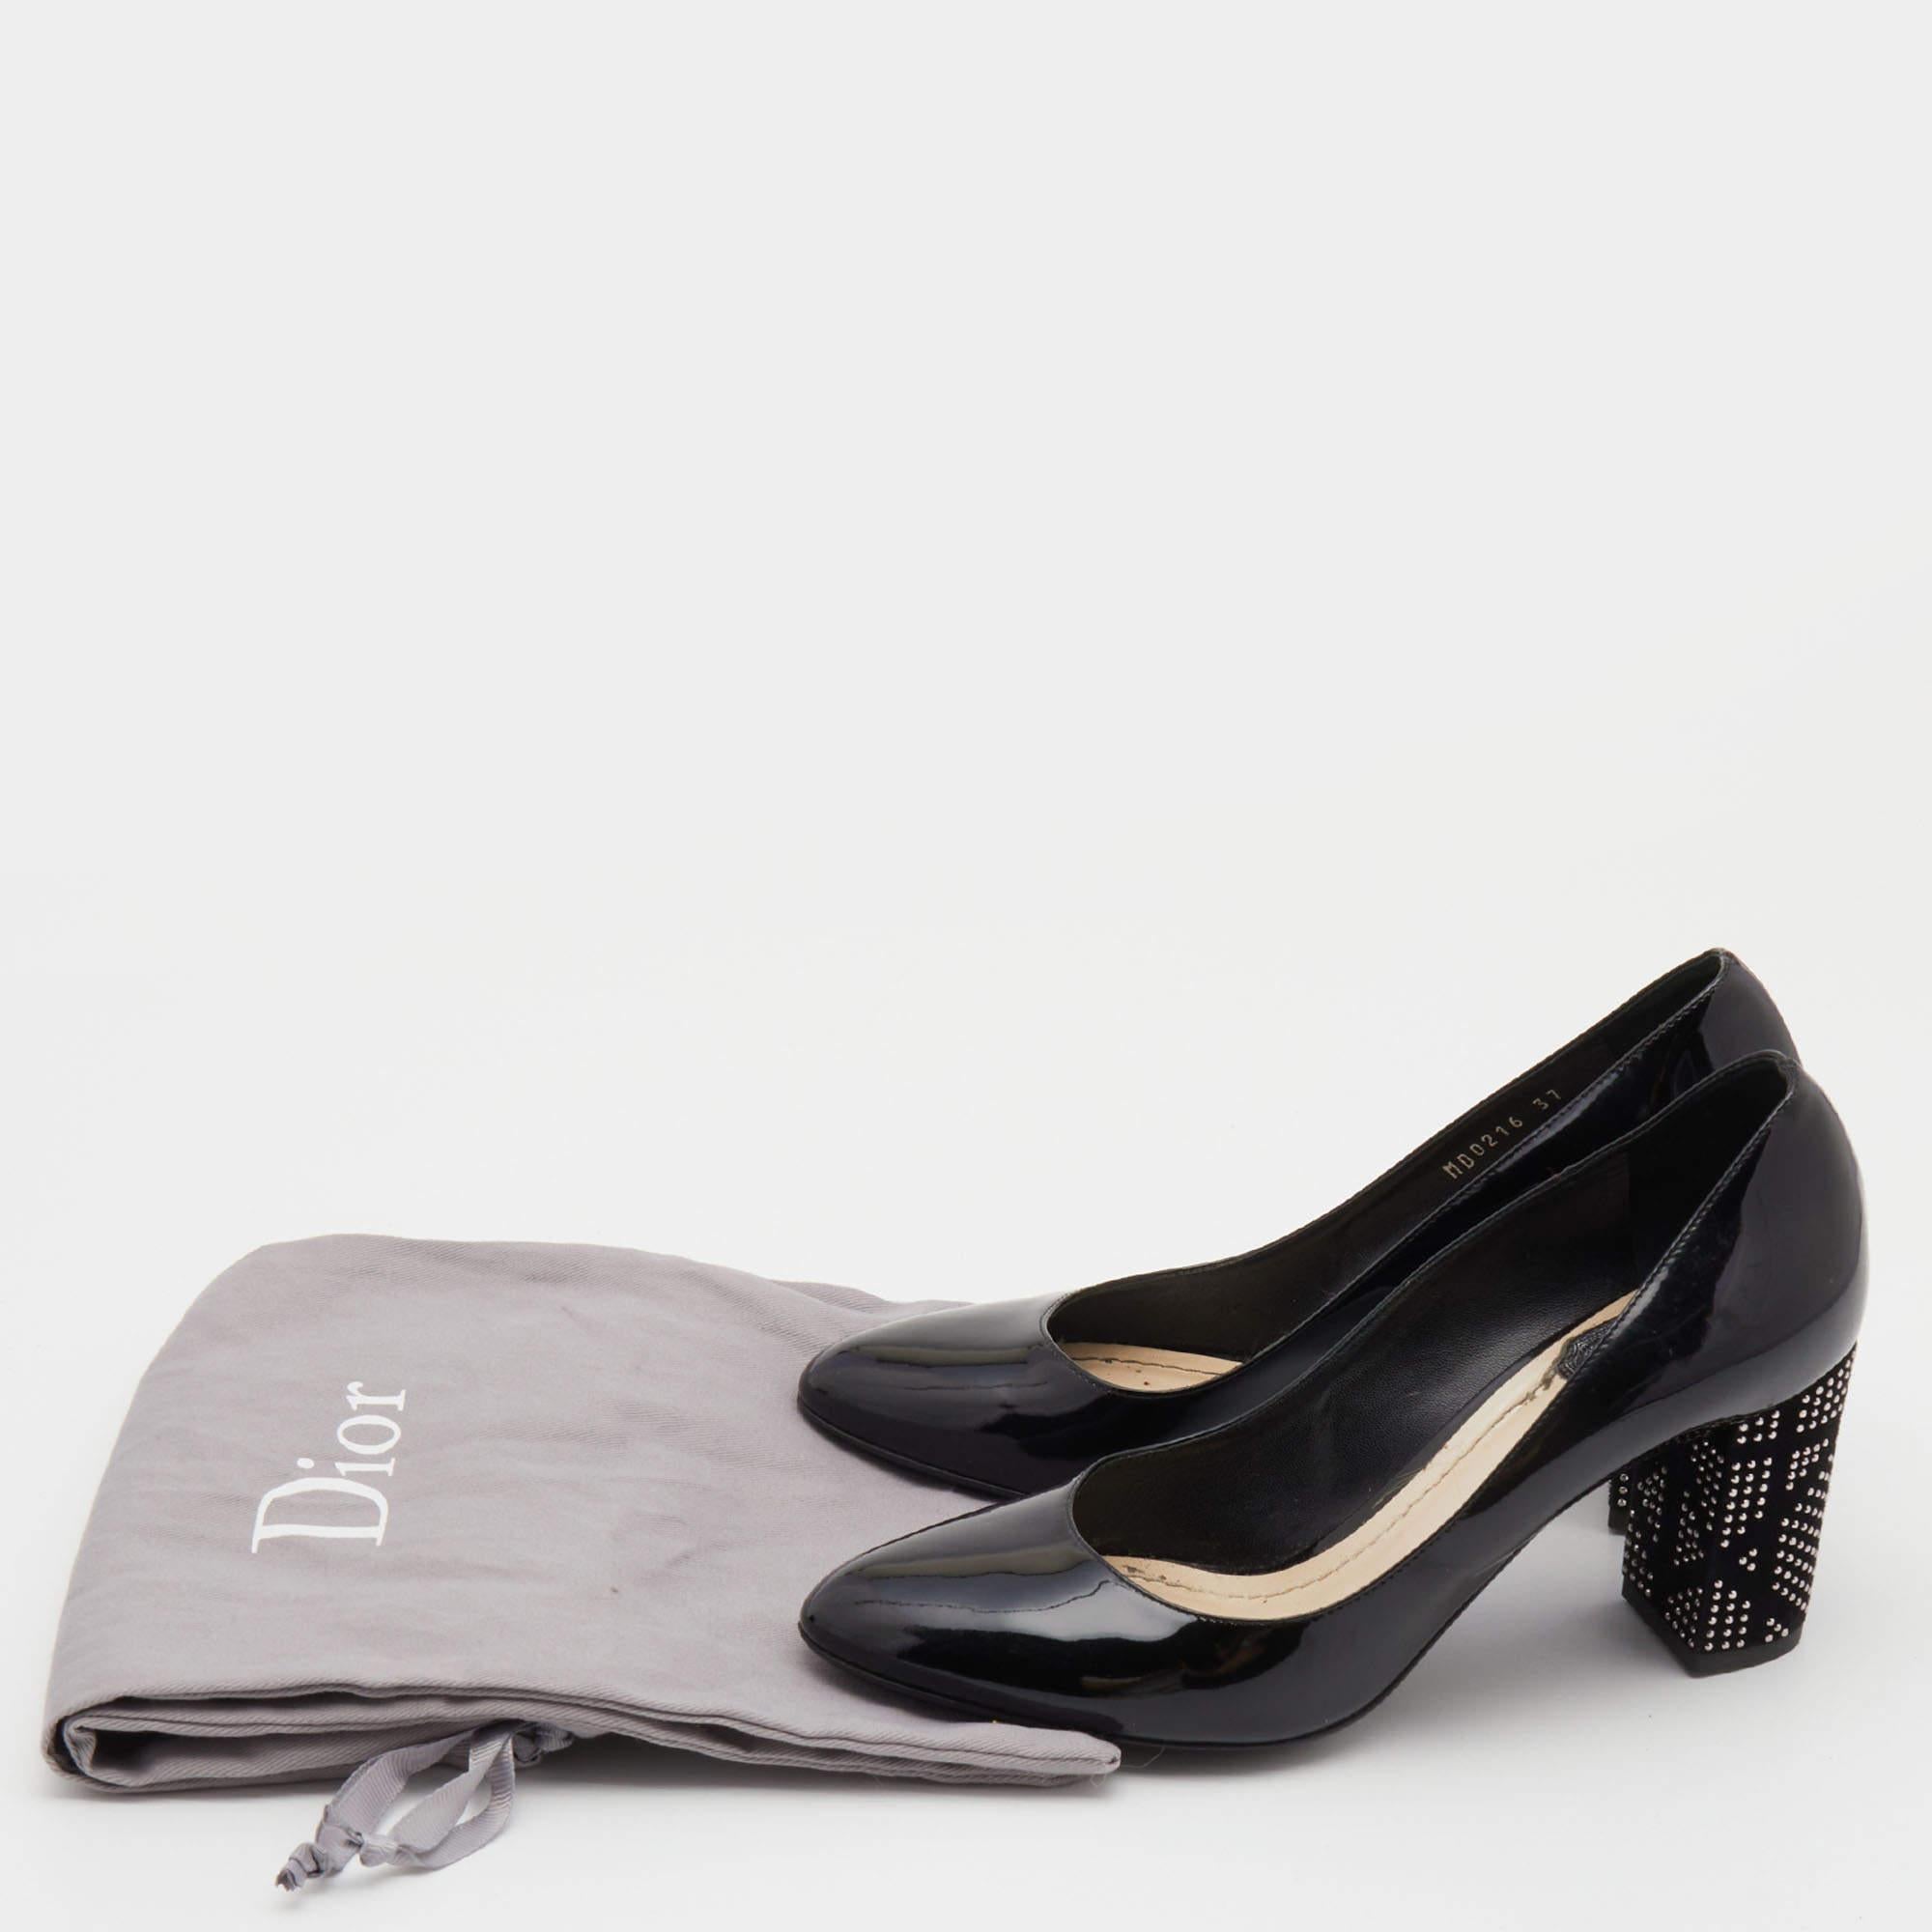 Dior Black Patent Leather Studded Block Heel Pumps Size 37 6